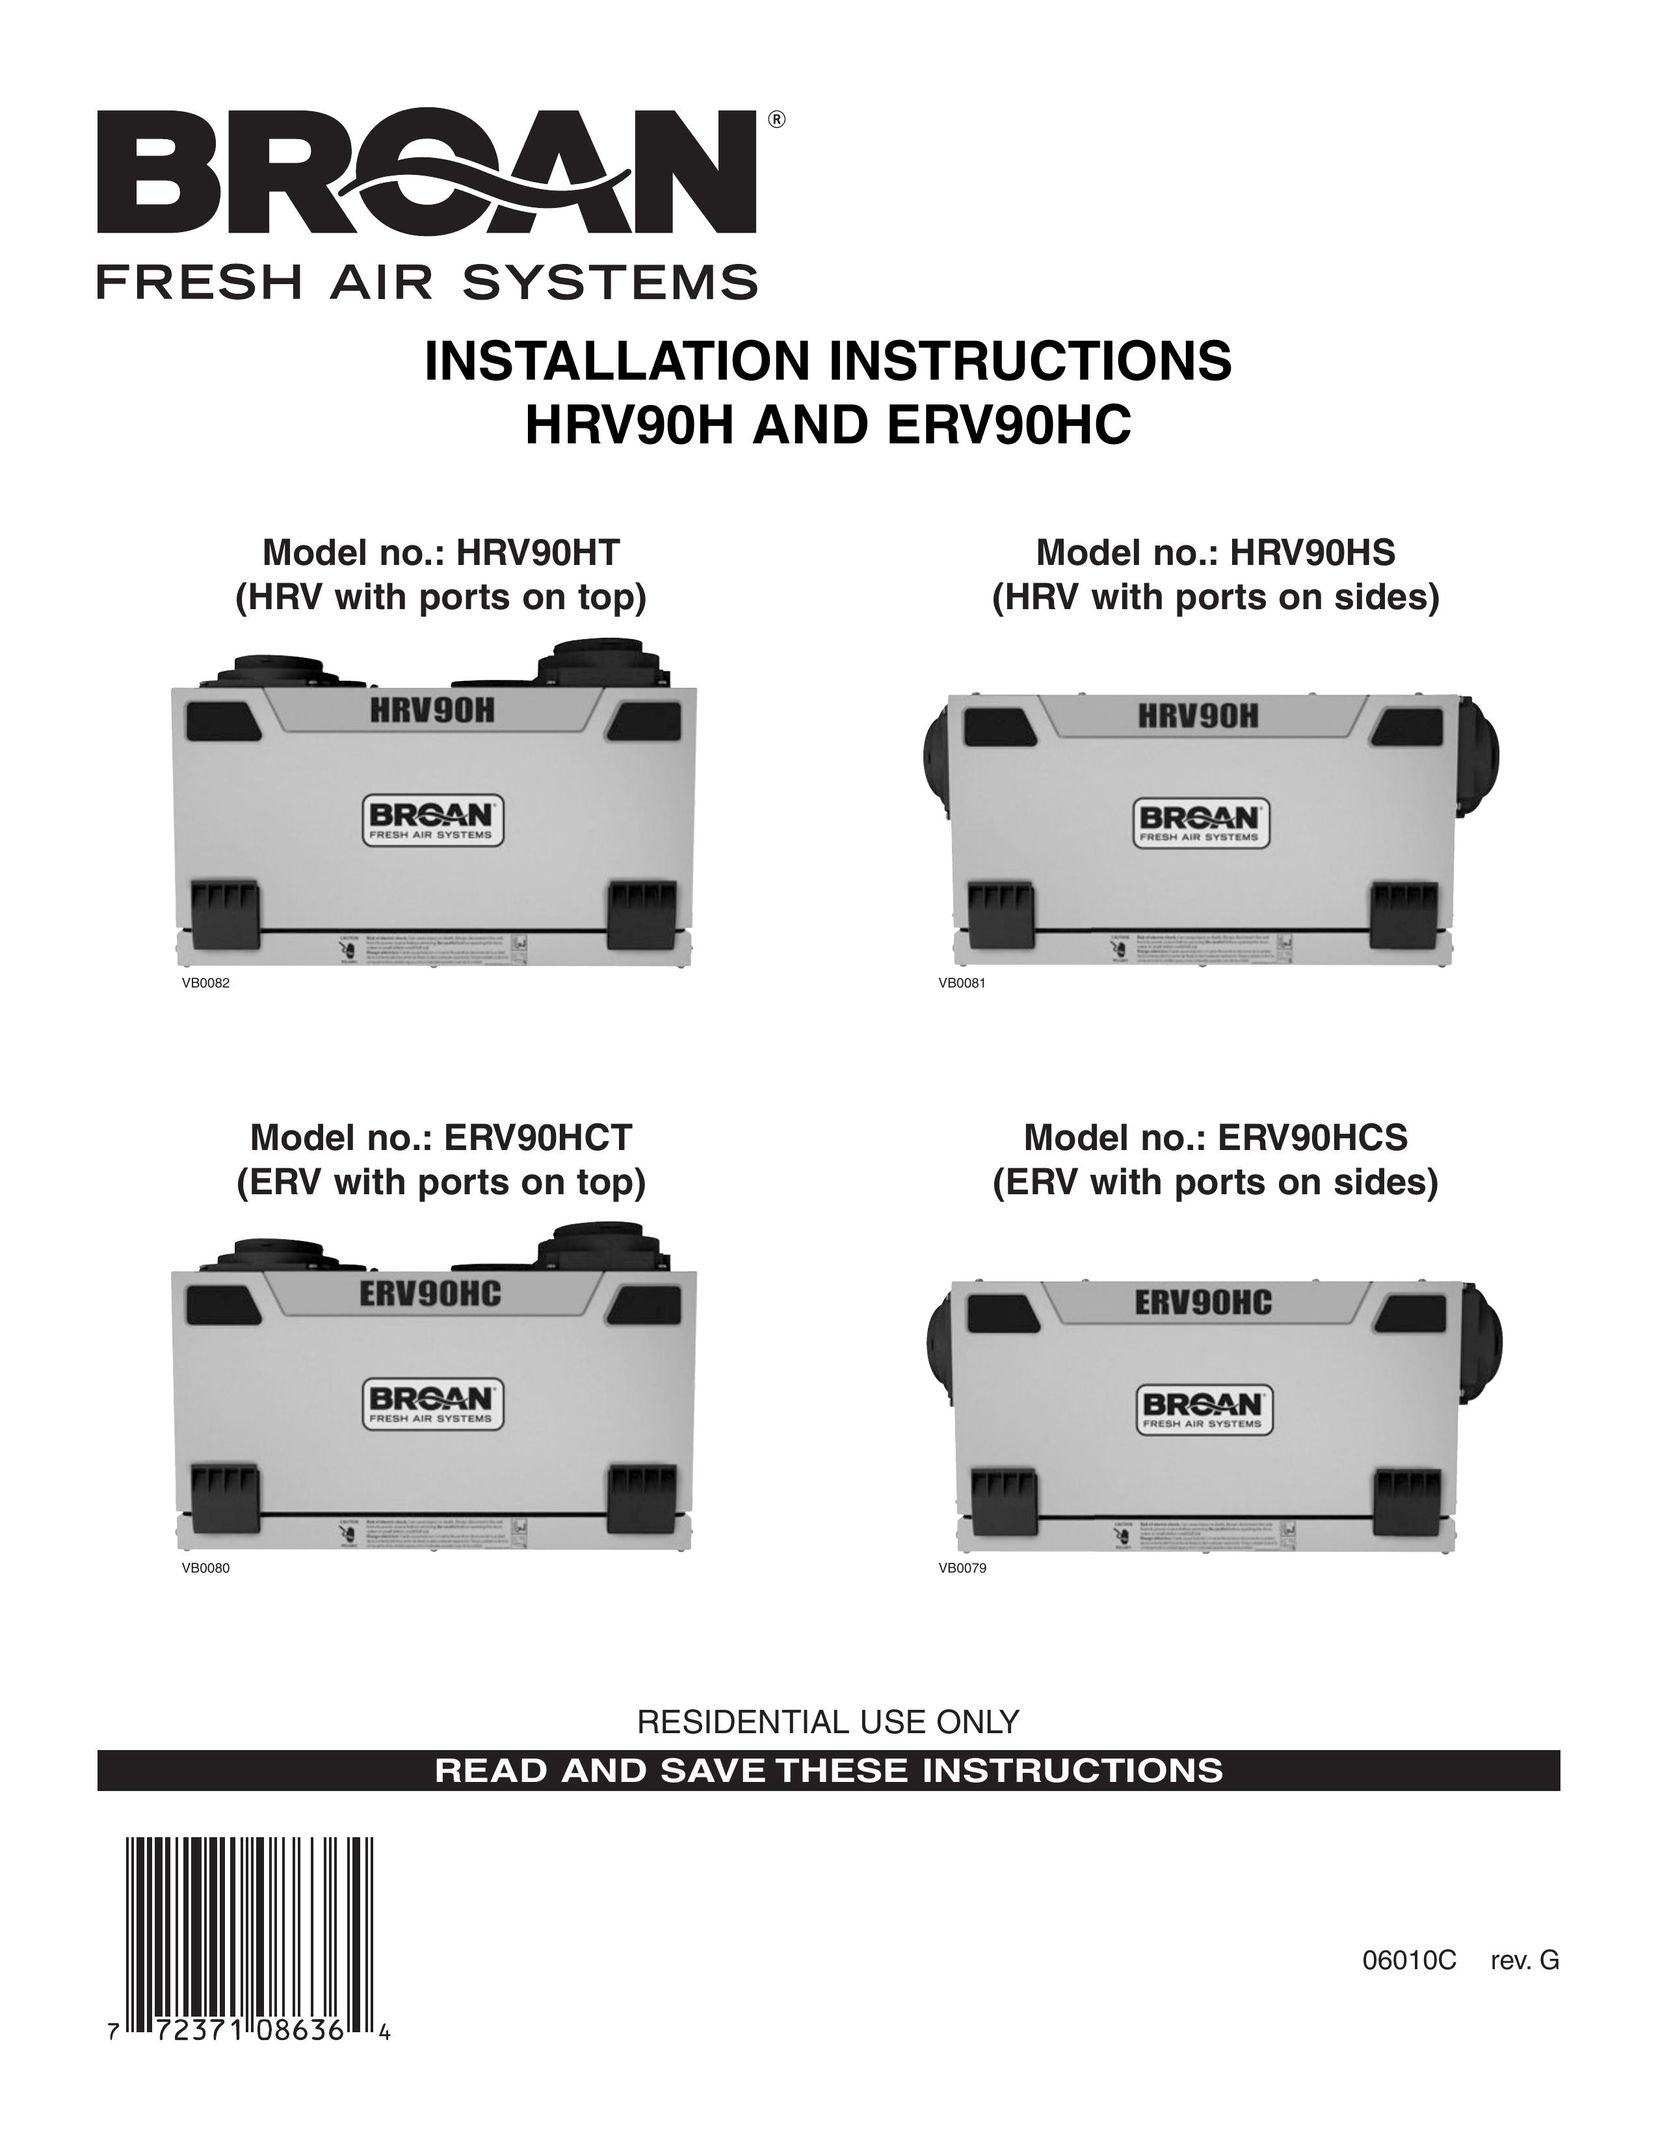 Broan HRV90HS Air Cleaner User Manual